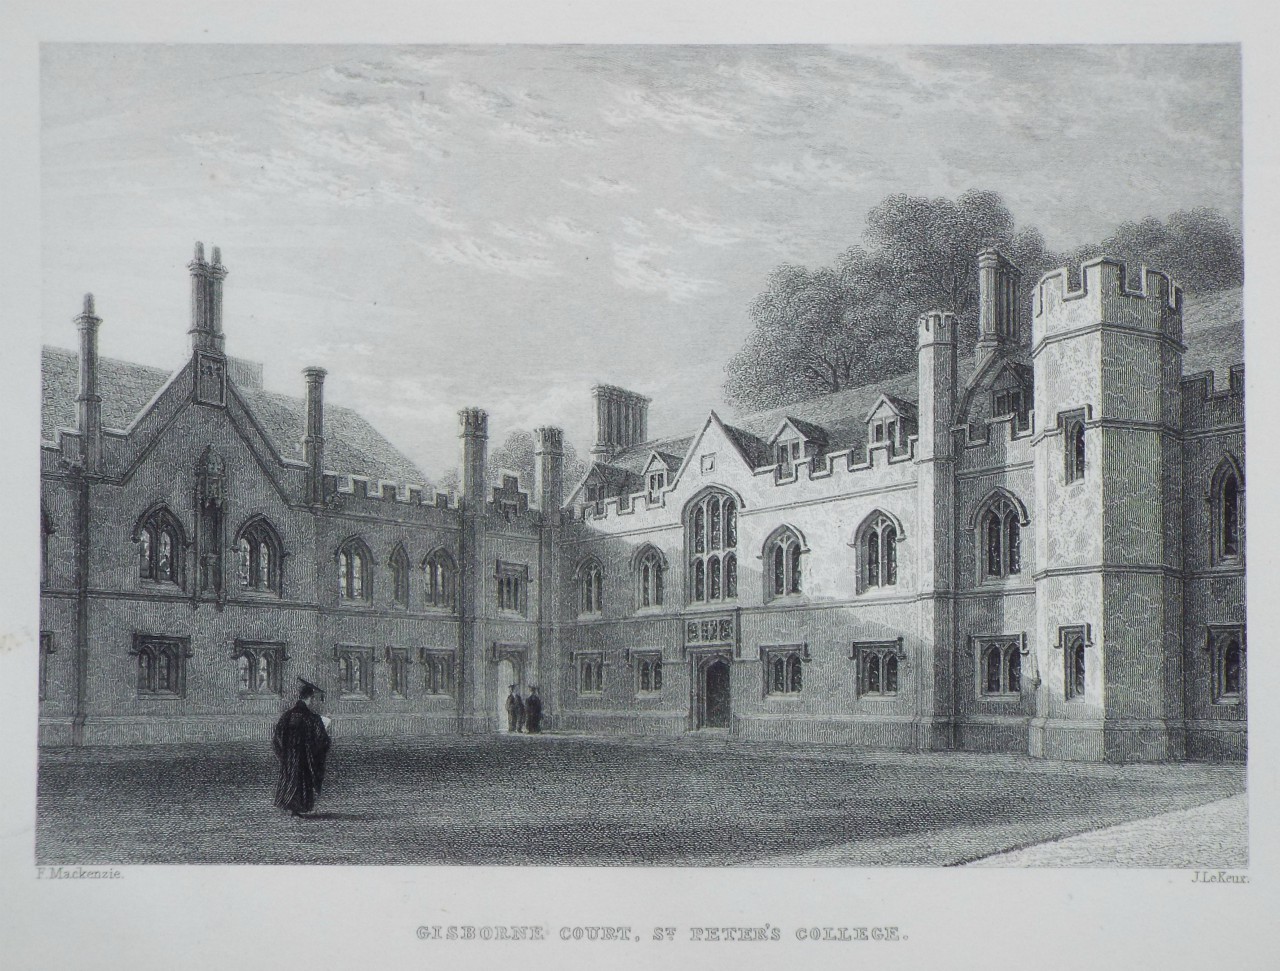 Print - Gisborne Court, St. Peter's College.